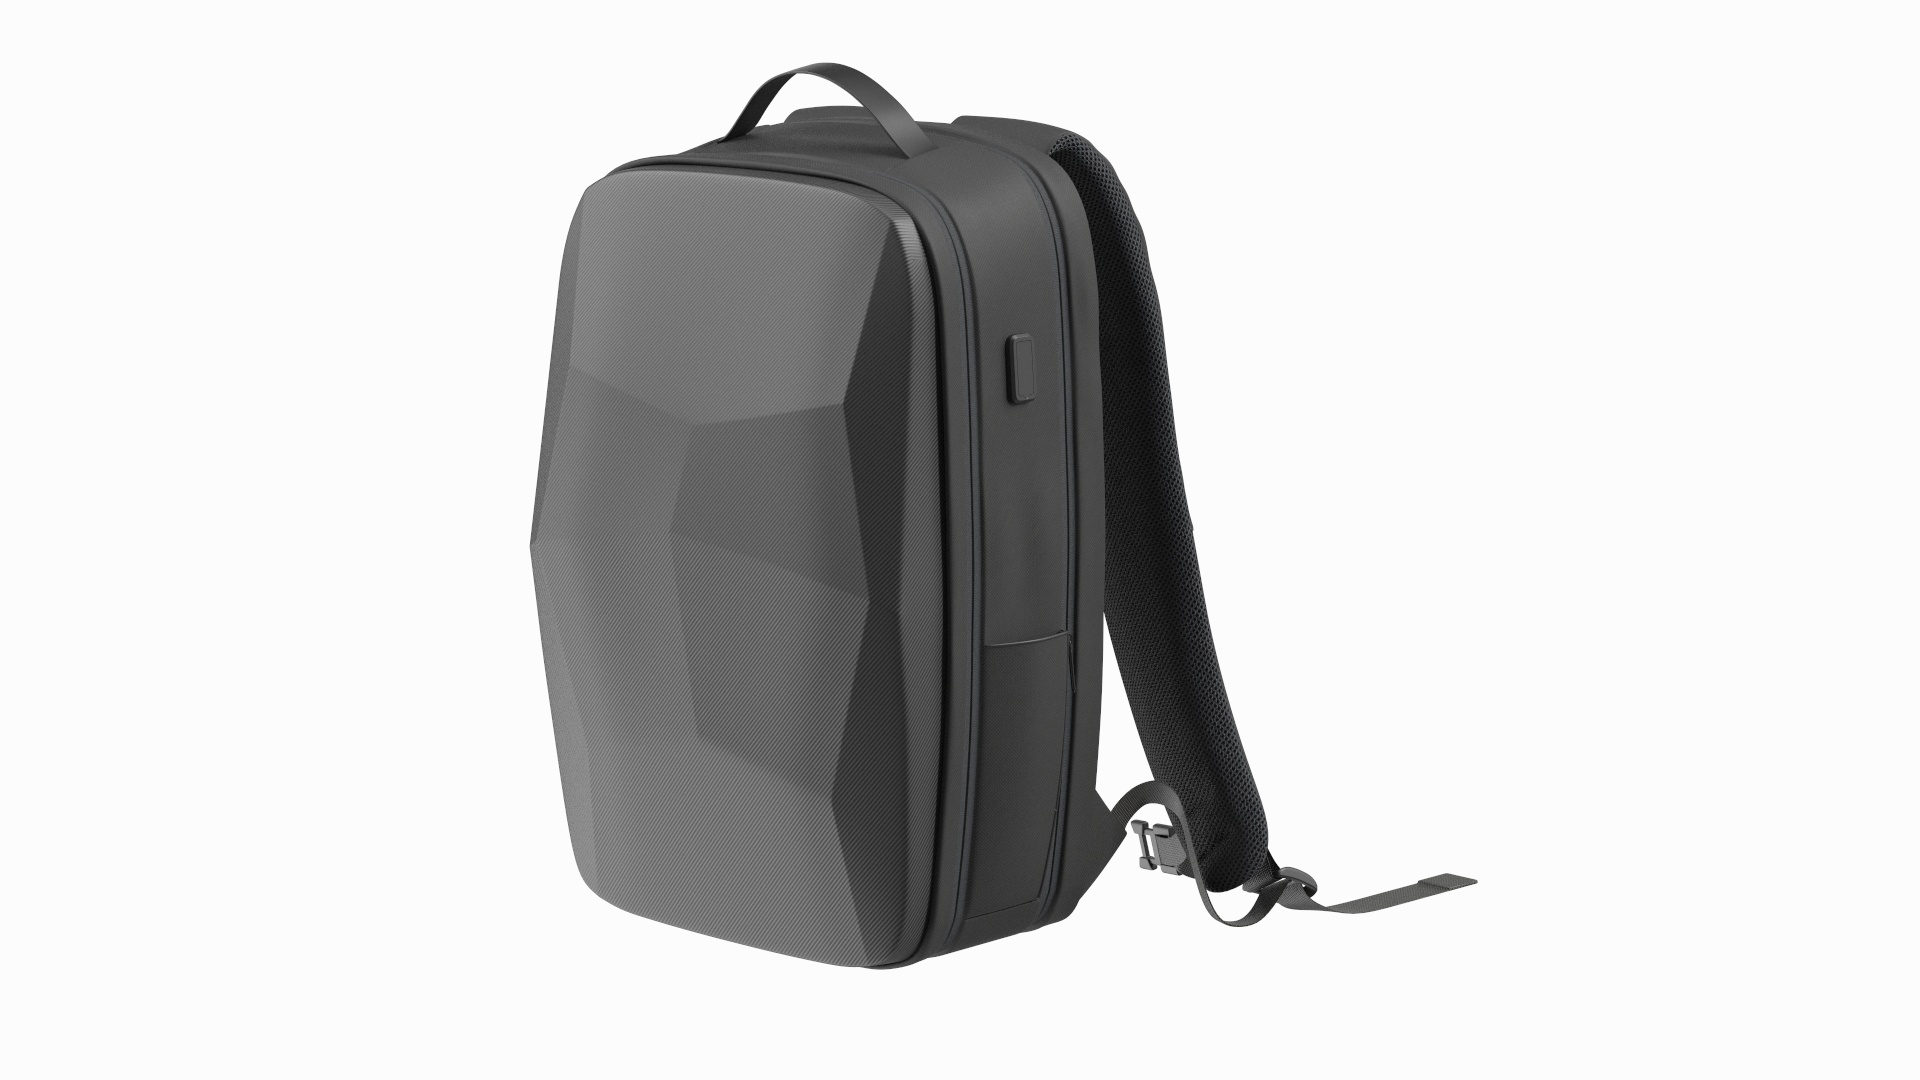 3D Waterproof Laptop Backpack Black model - TurboSquid 2139428